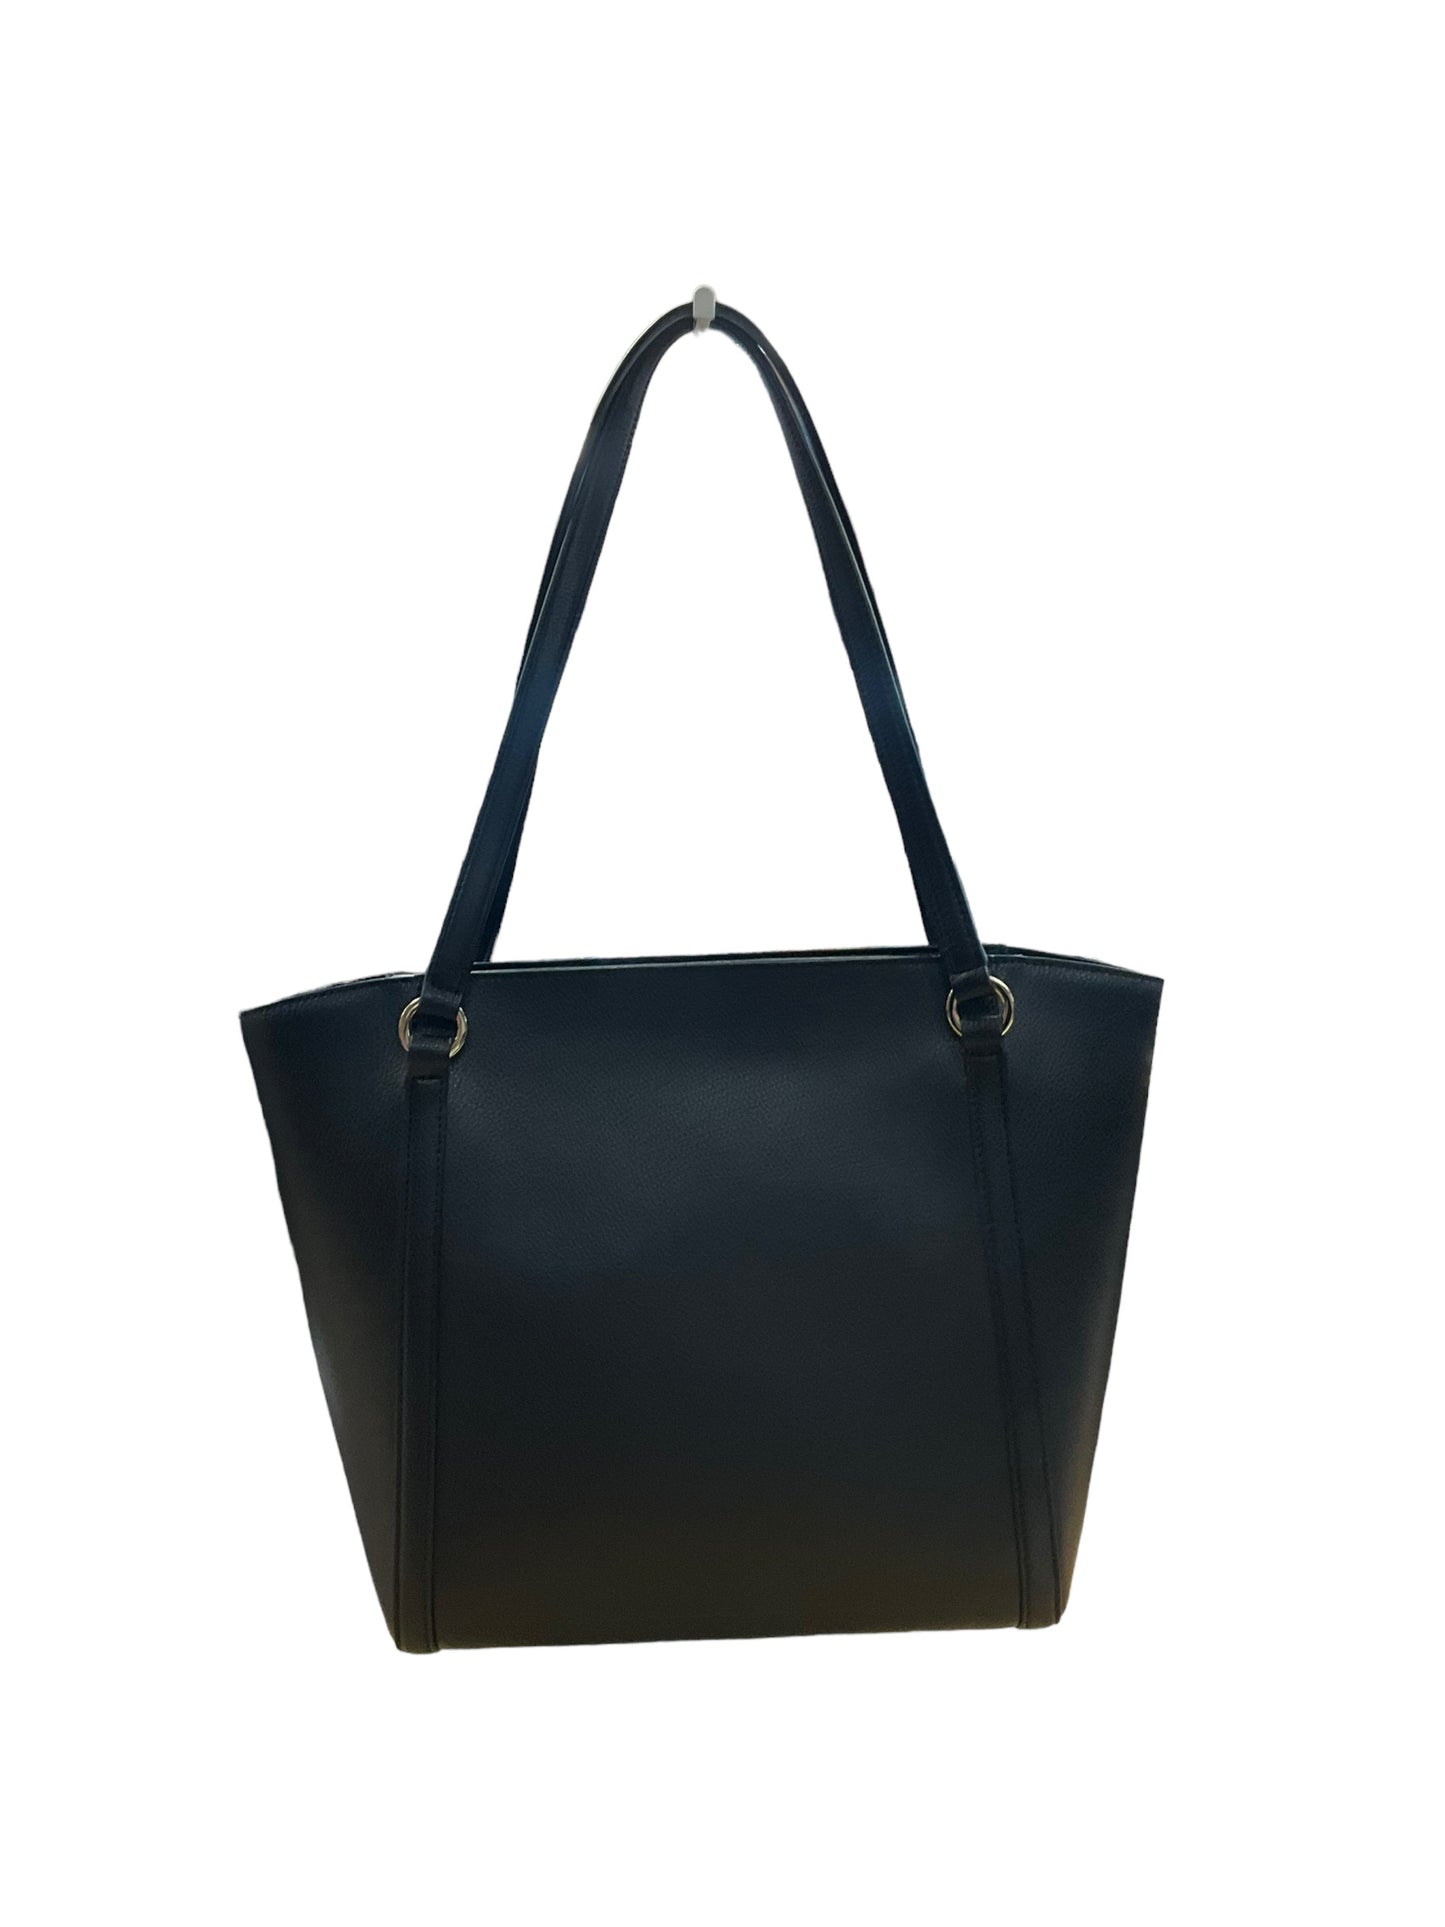 Handbag Designer By Karl Lagerfeld  Size: Large